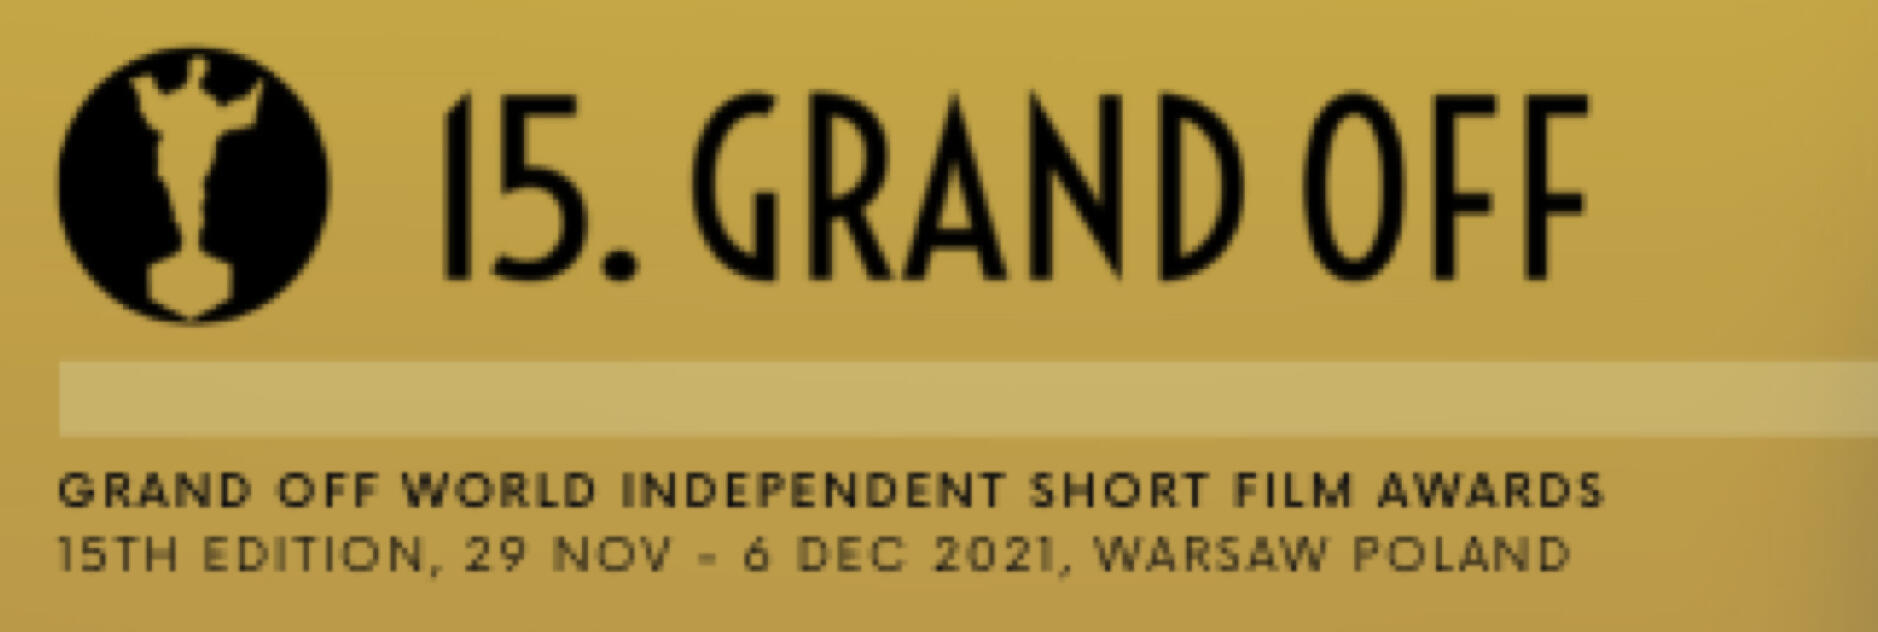 Grand Off World Independent Short Film Awards